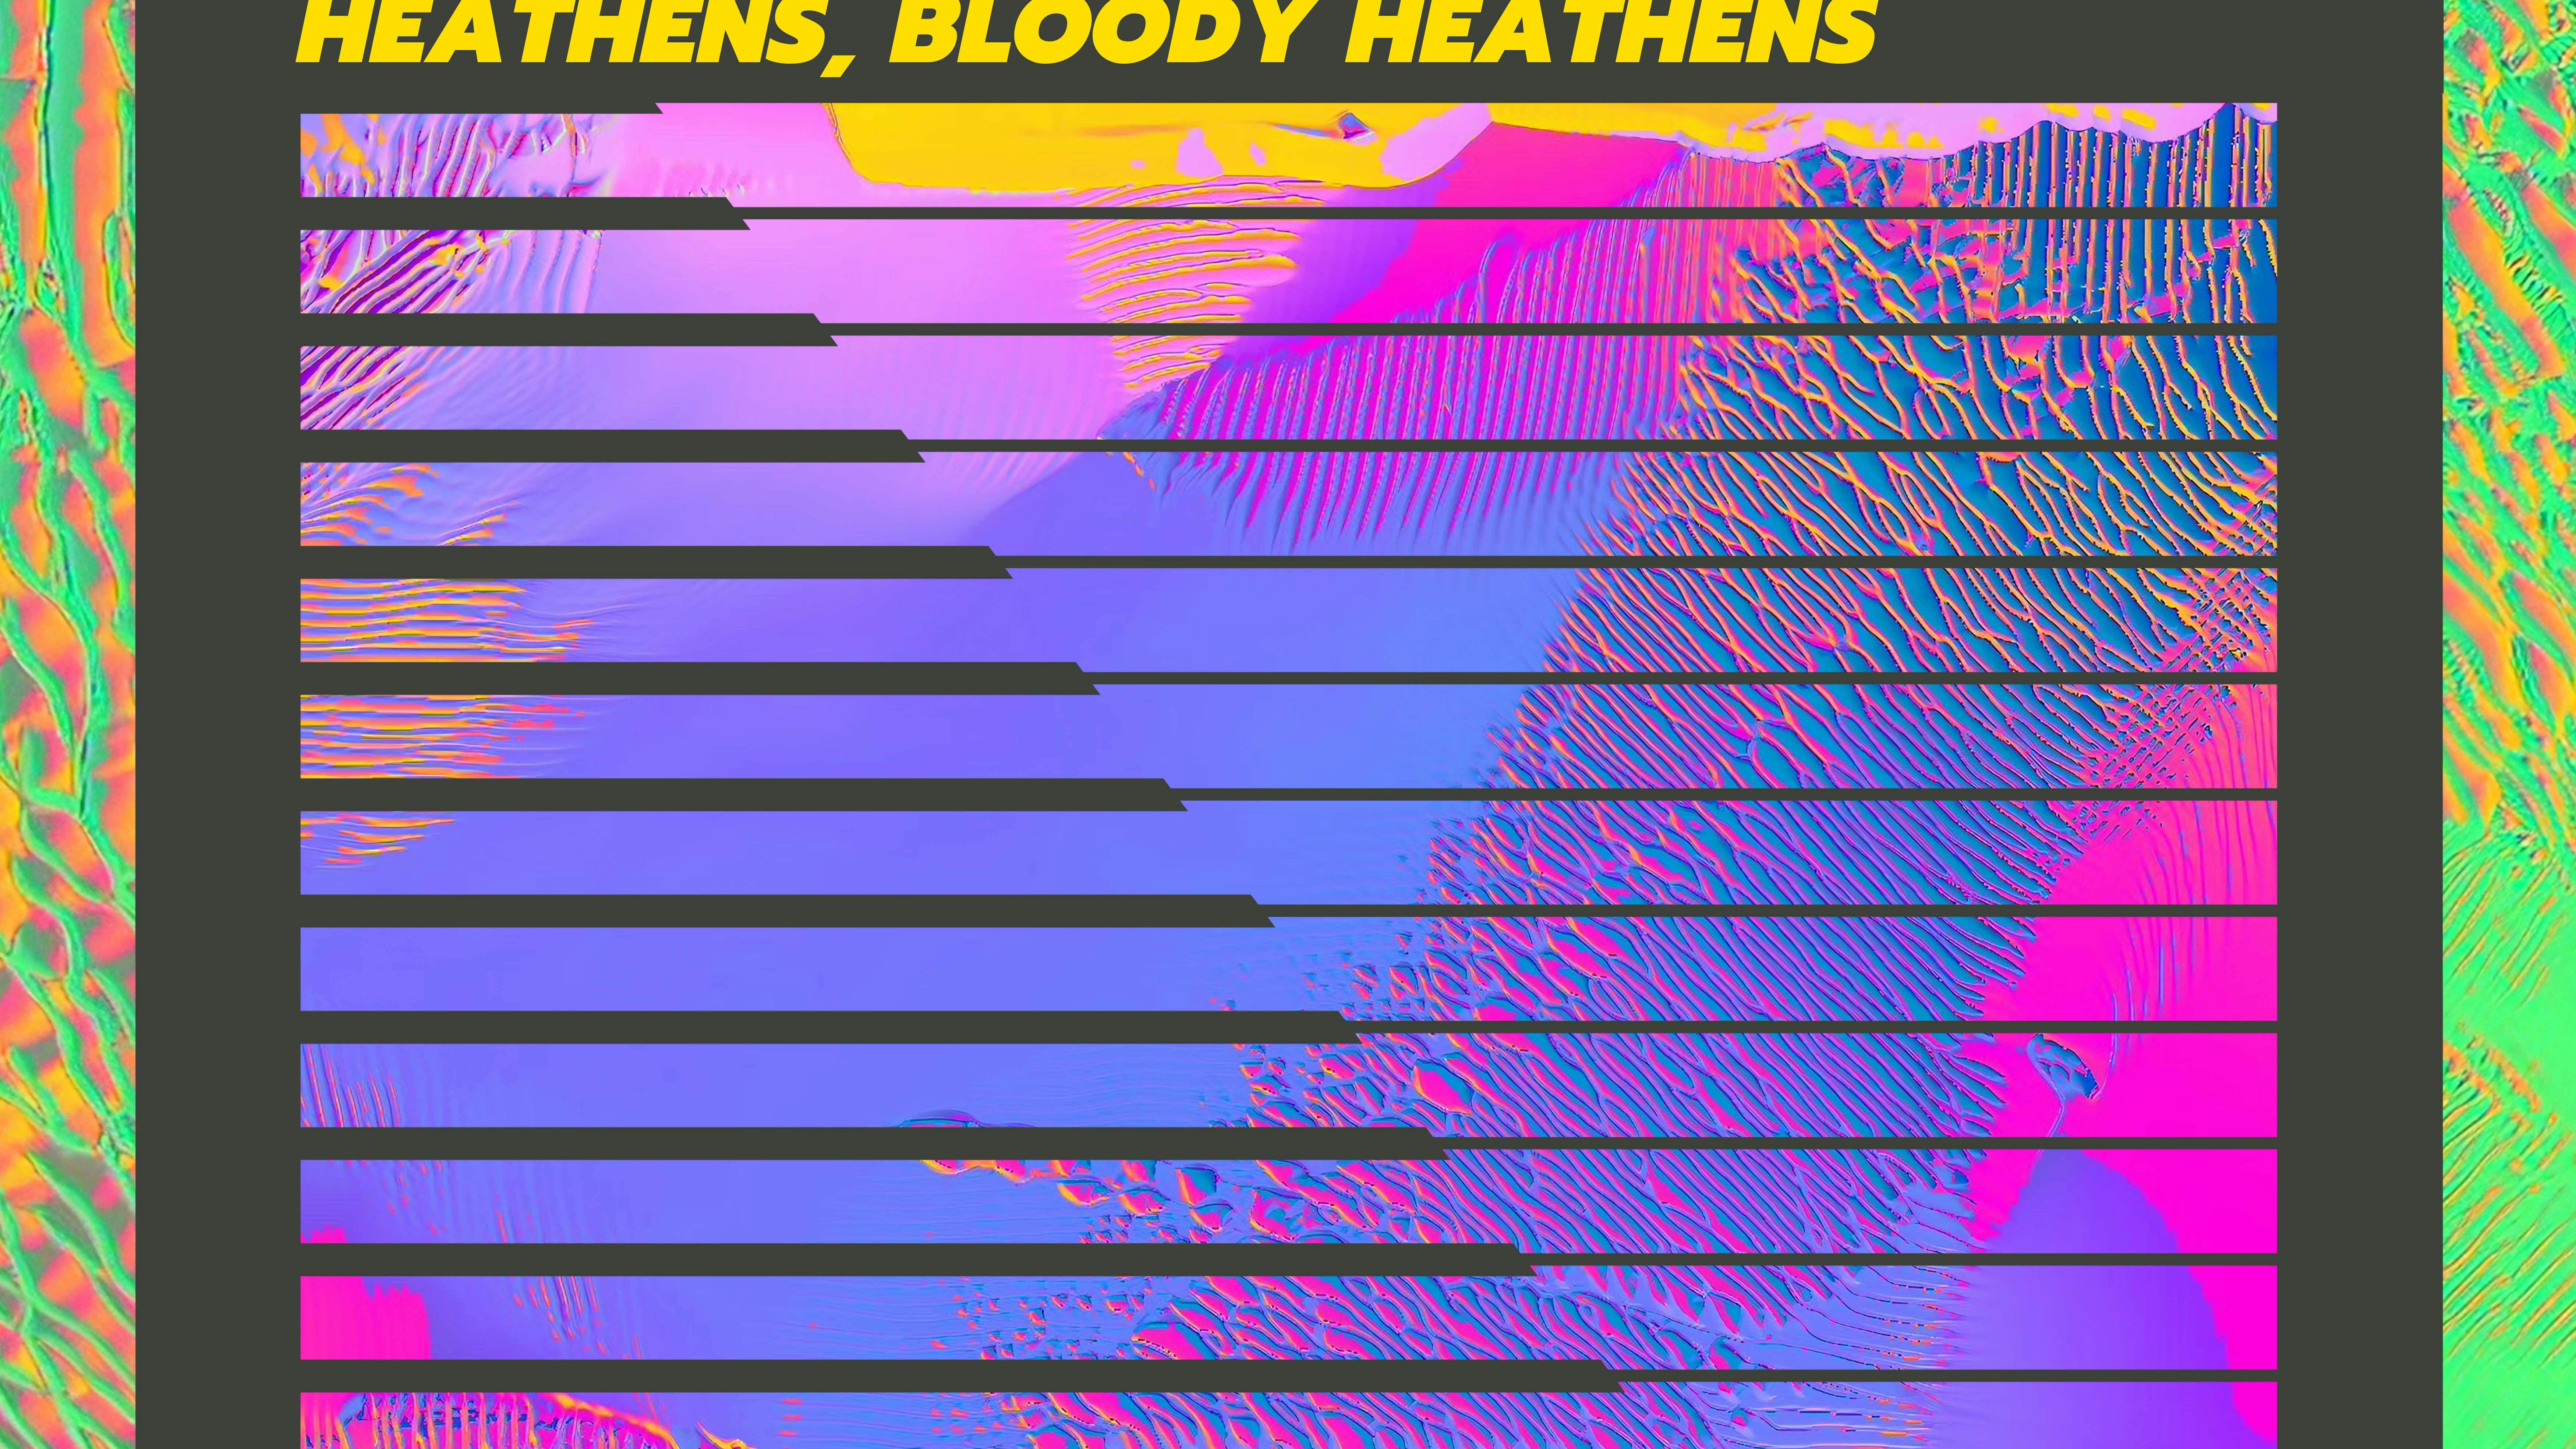 HETTA + Mould + Heathens, Bloody Heathens